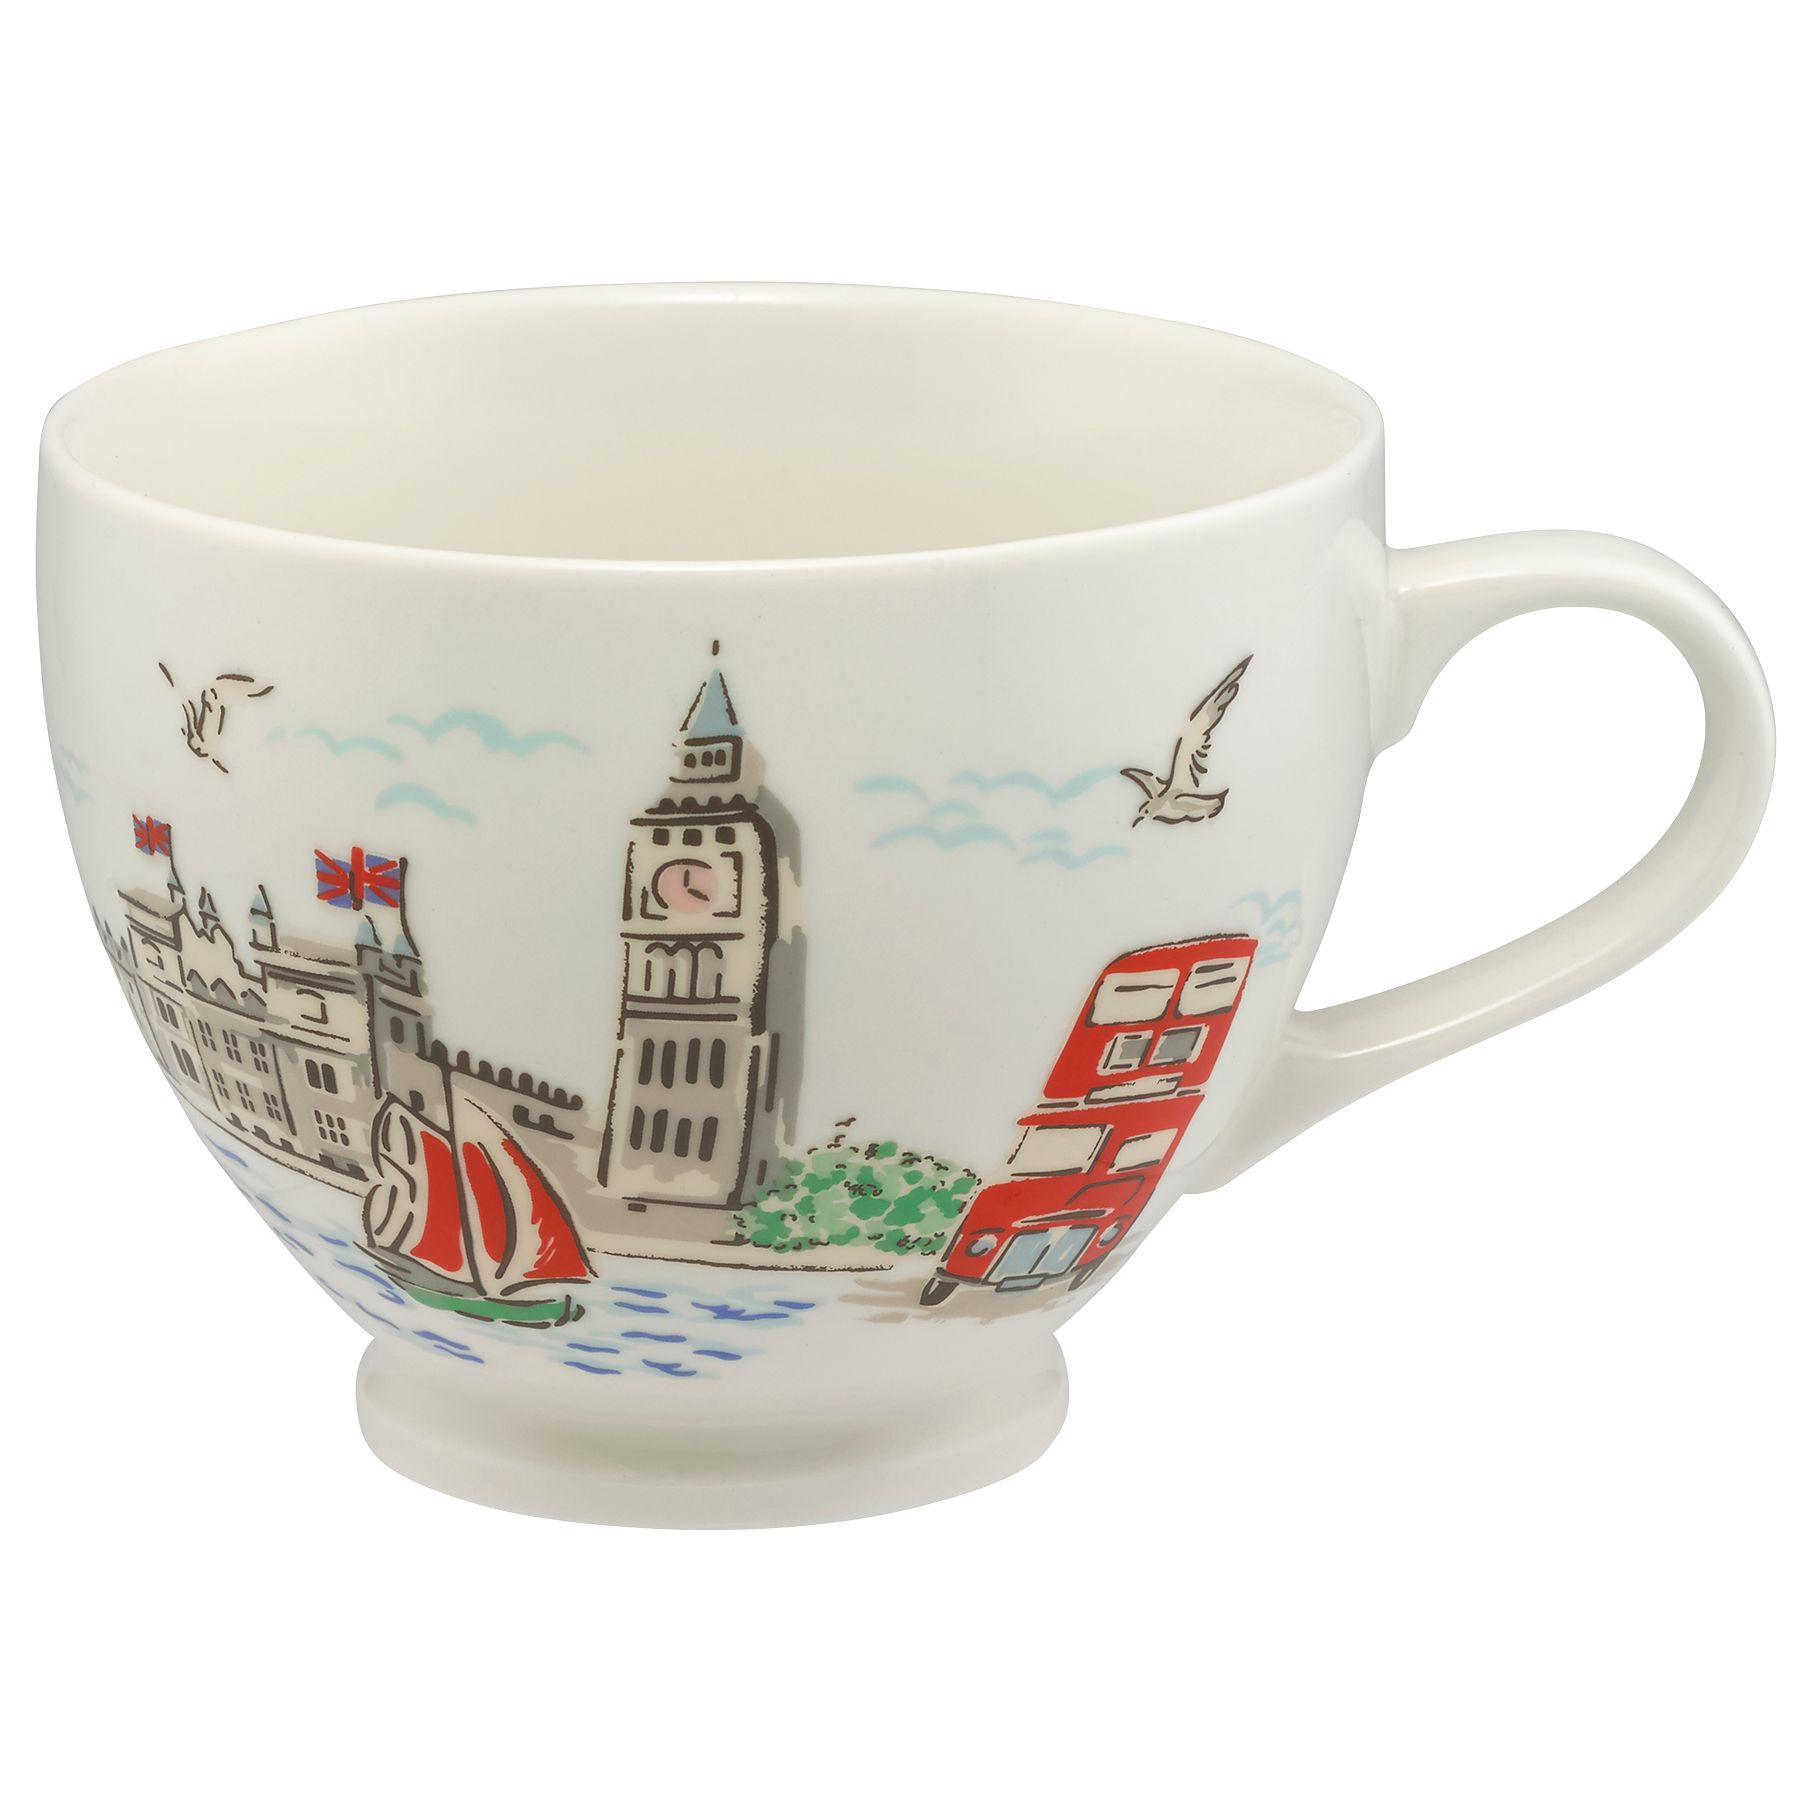 Cath Kidston London Tea Cup, Multi 